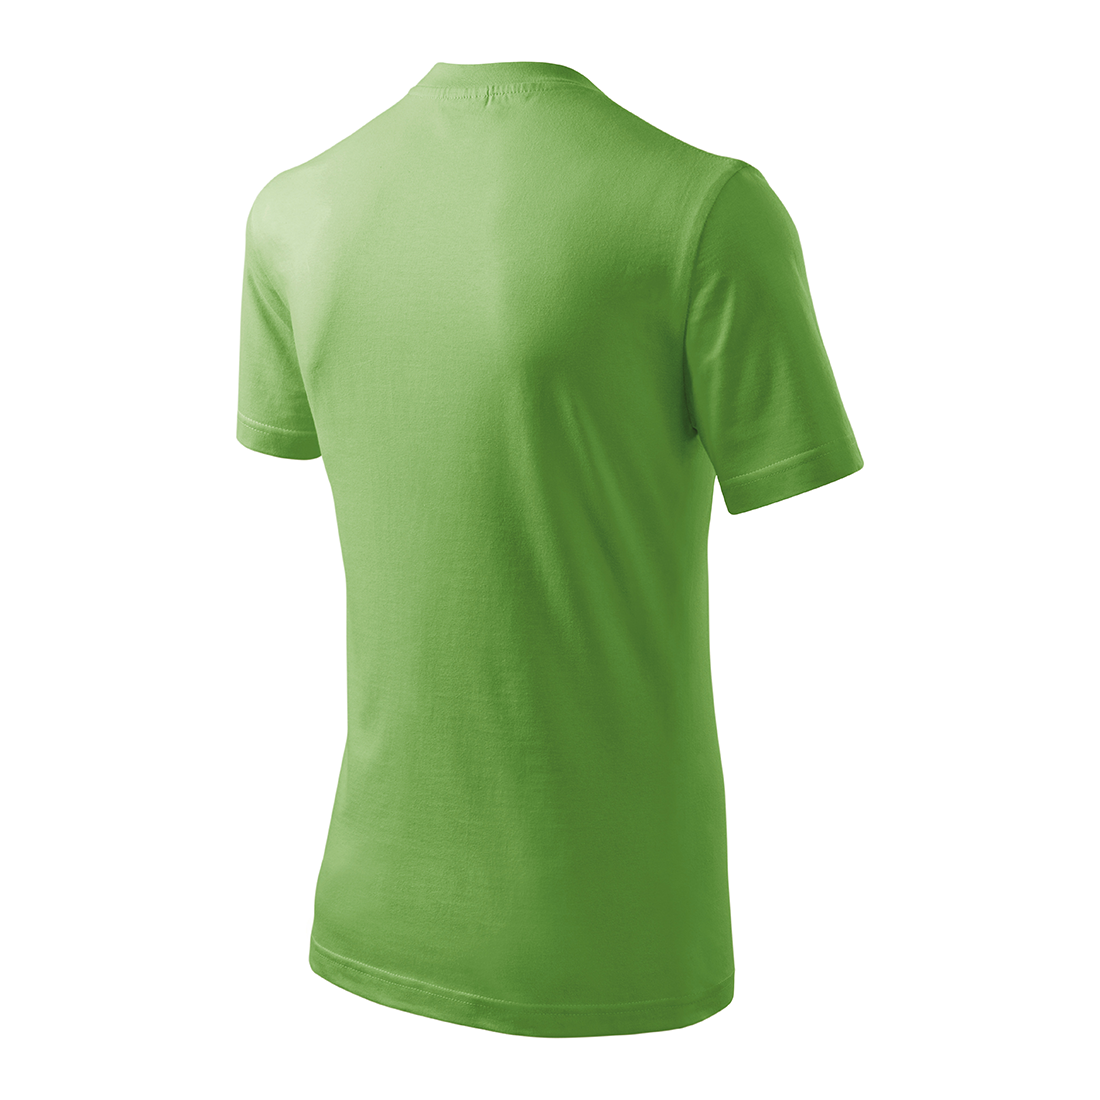 Unisex classic T-shirt - Safetywear